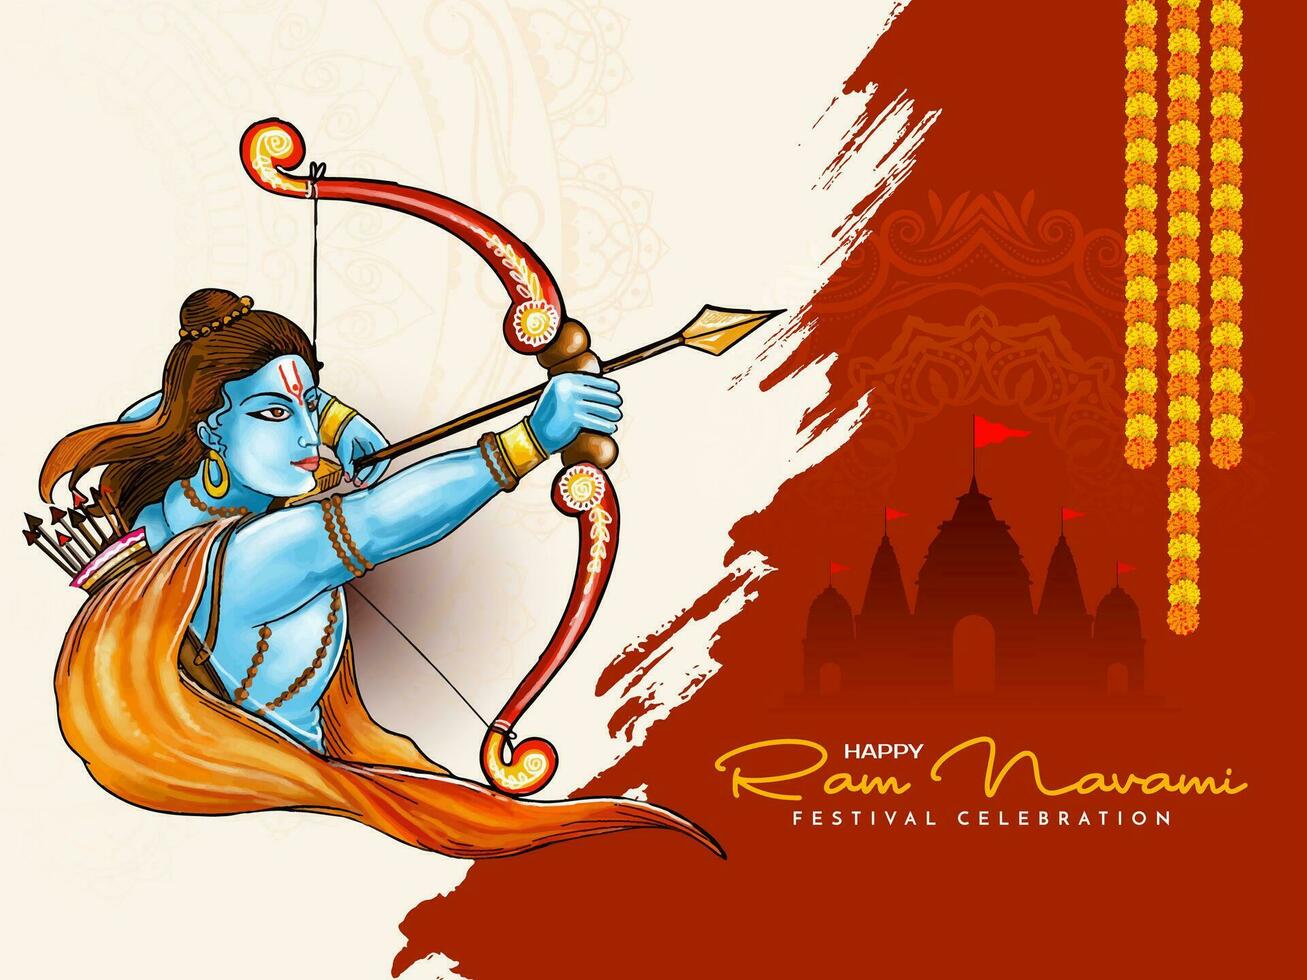 Happy Ram navami Hindu festival celebration card design vector